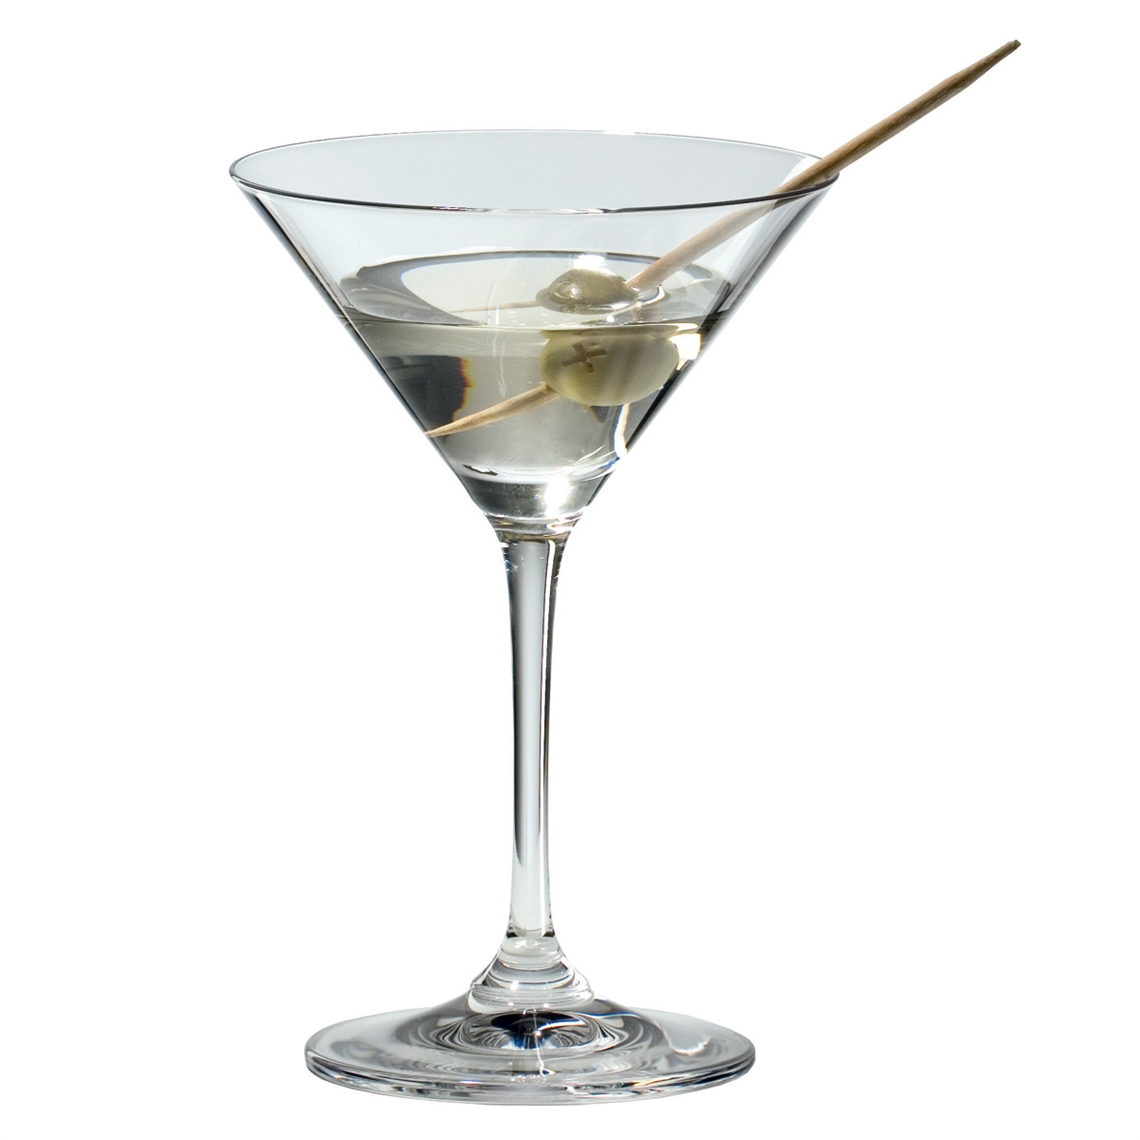 View more spirit glasses from our Martini Glasses range